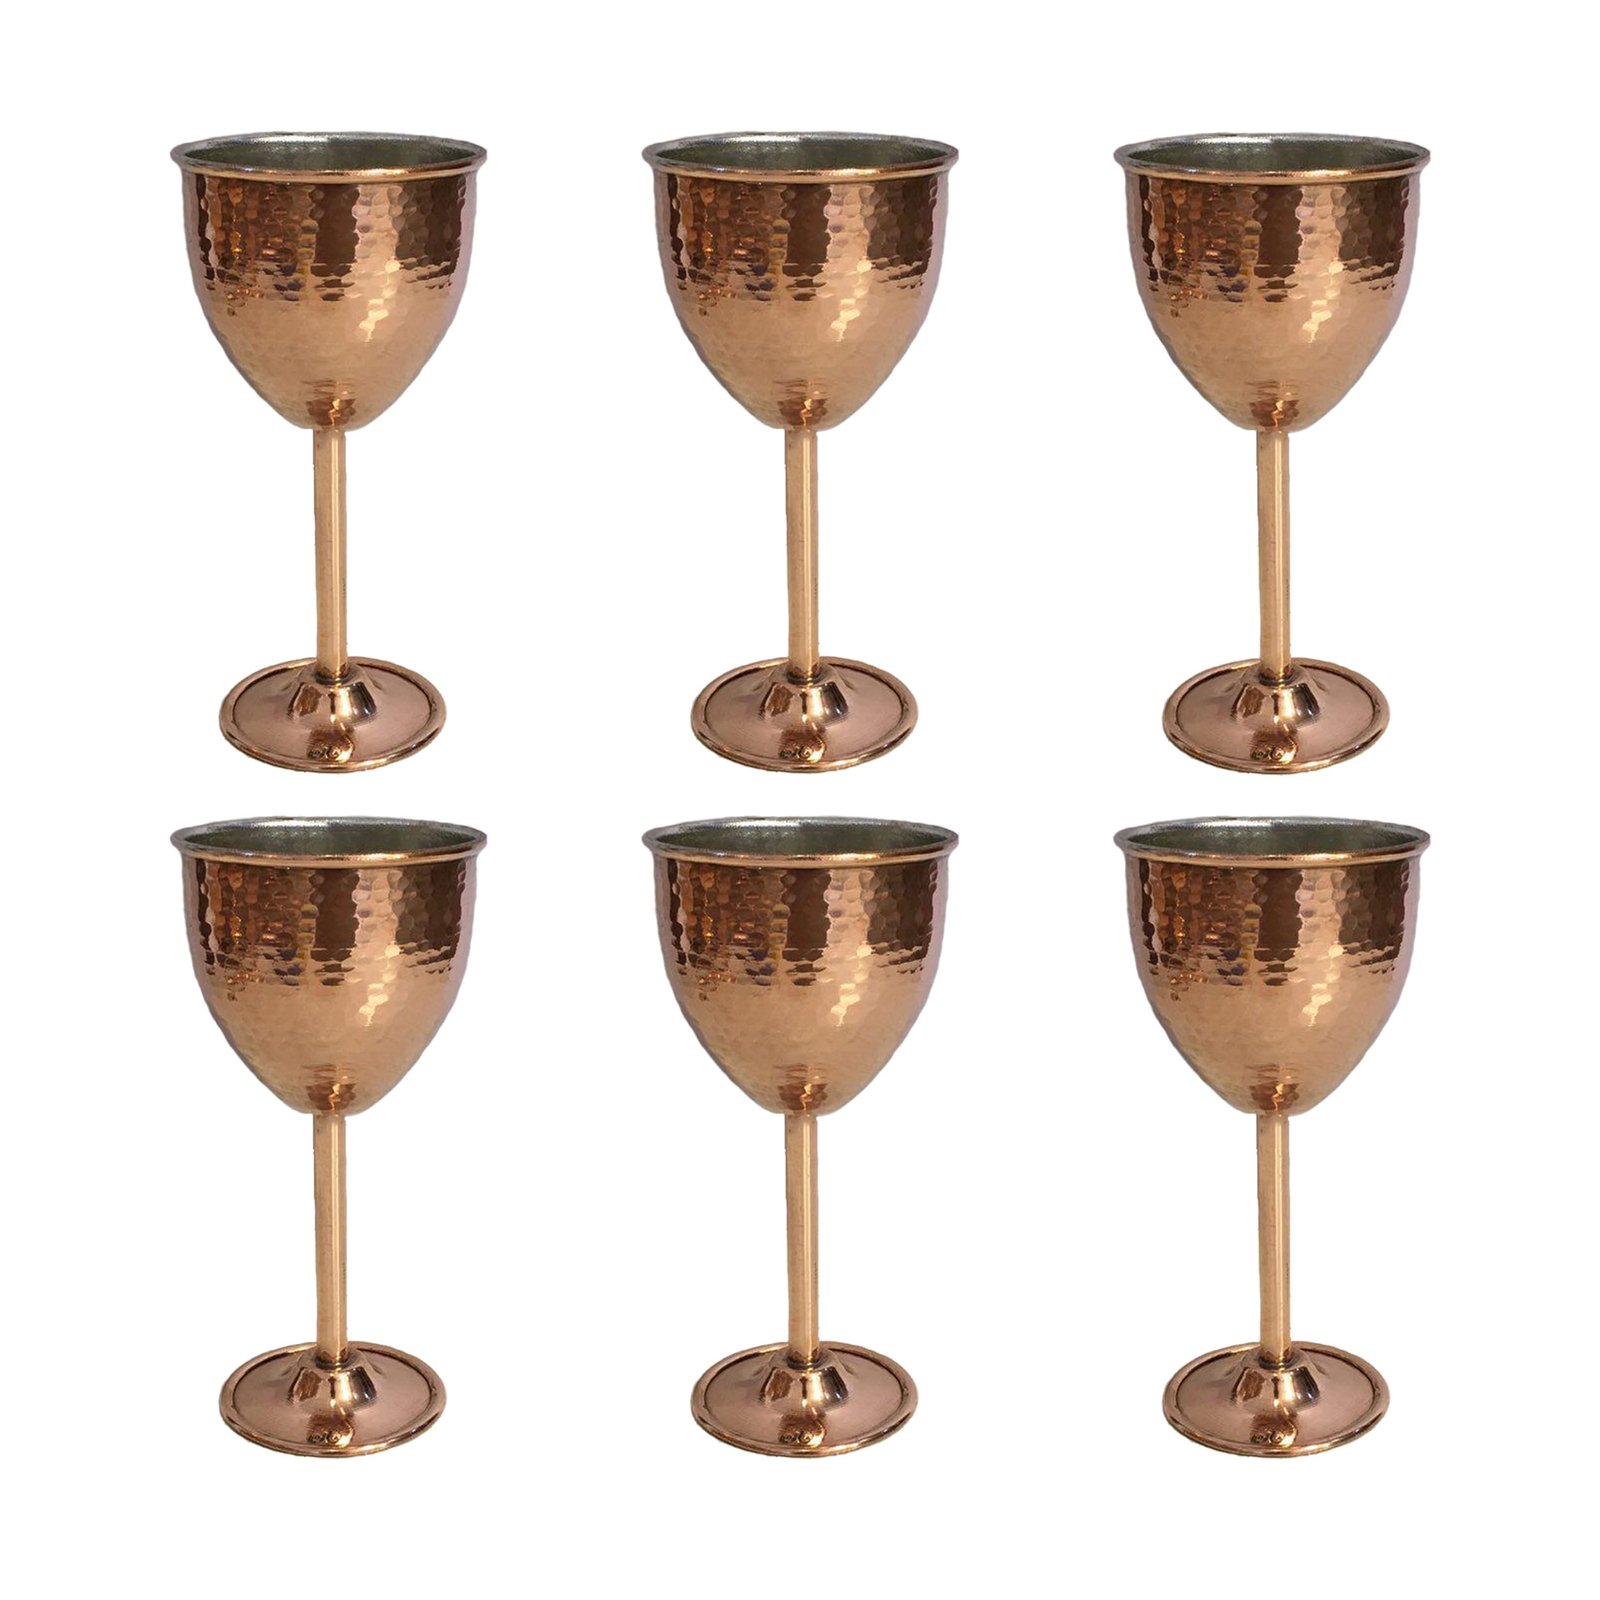 Handicraft Copper cup code c set 12 pcs, pris på koppargryta, kopparkrukspris